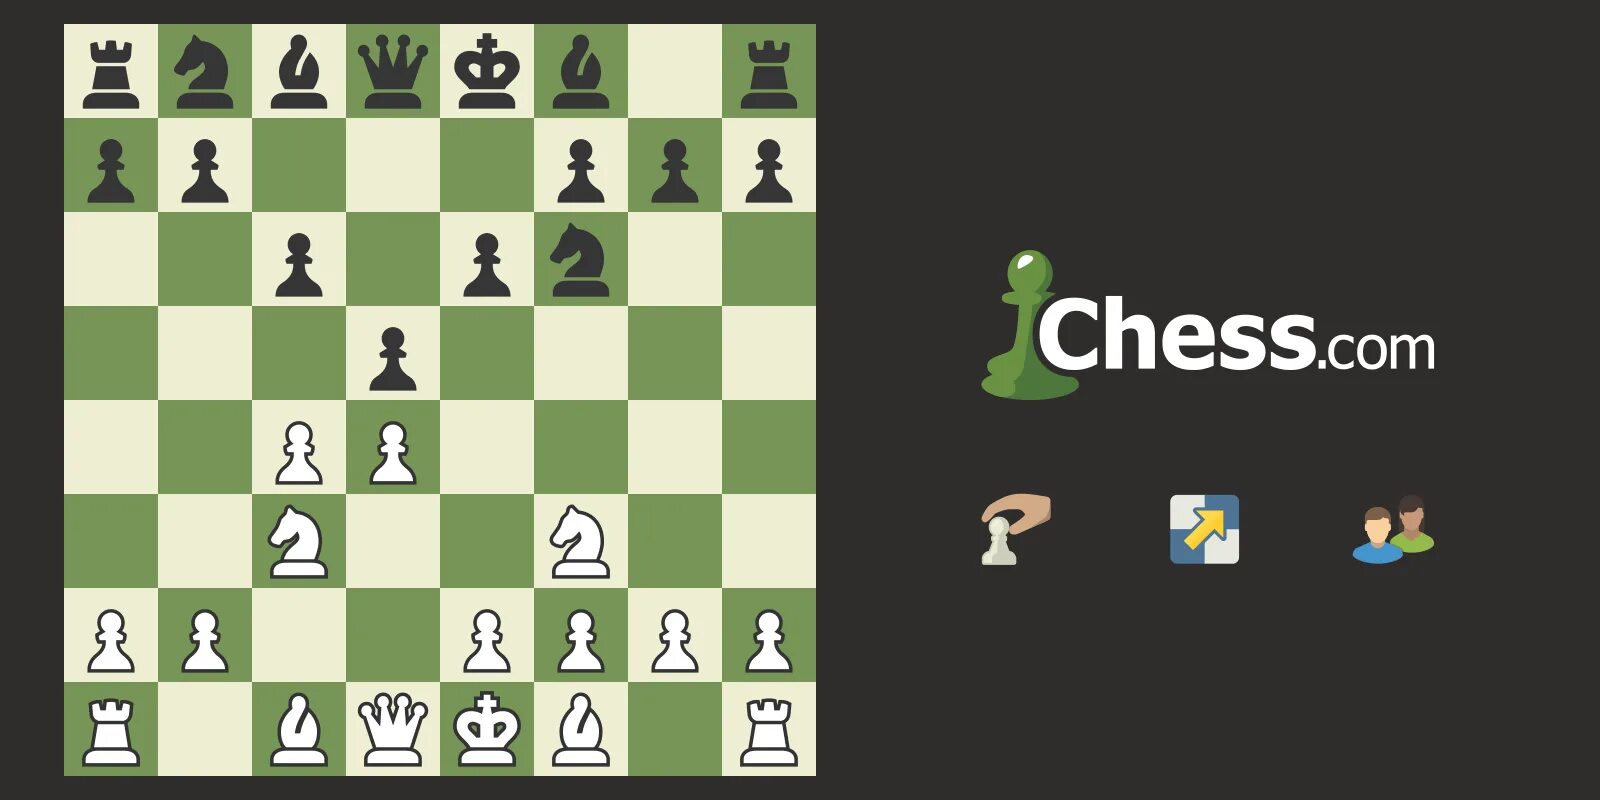 Шахматы Chess.com. Chess.com логотип. Дебют Понциани. 6d шахматы.